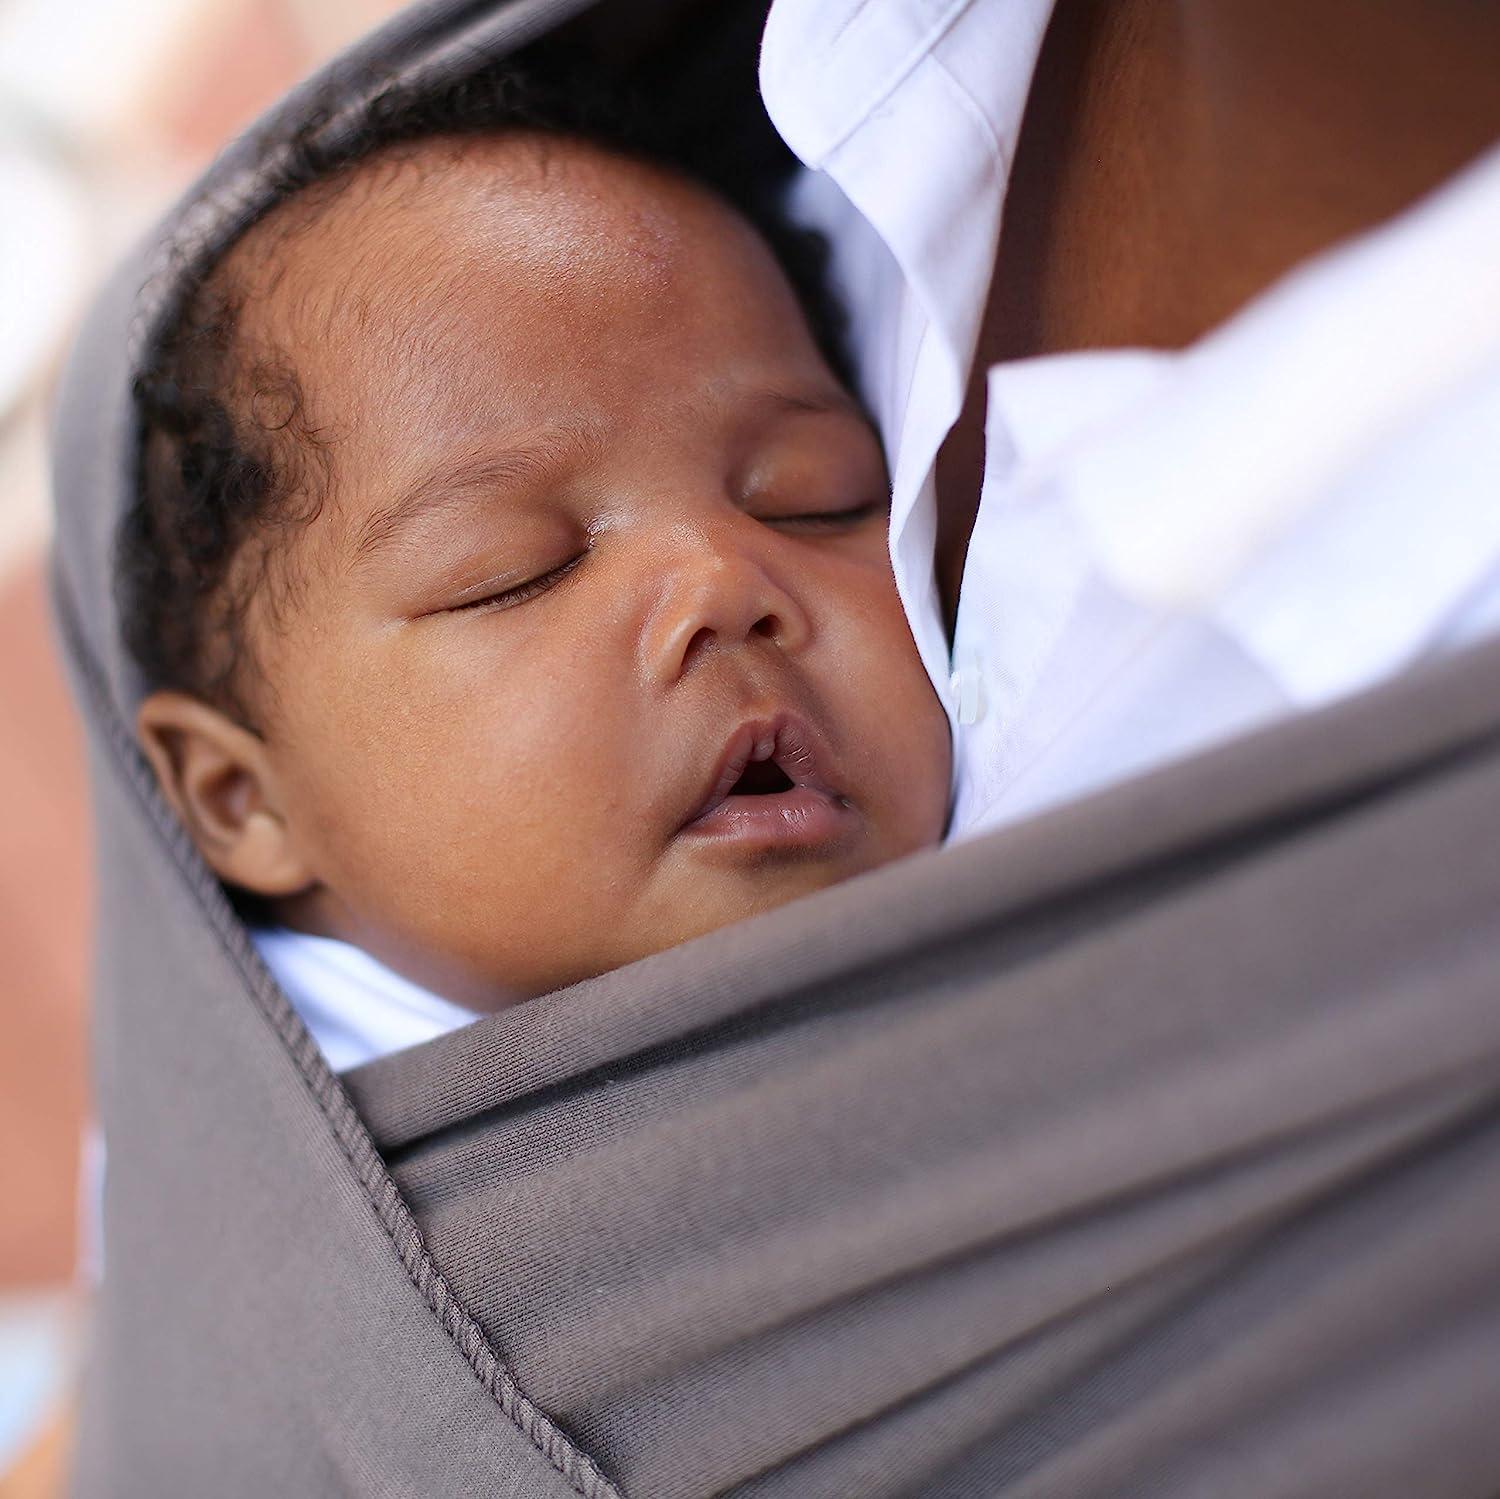 Sleepy Wrap Baby Carrier Newborn to Toddler - Hands-Free Baby Carrier Wrap  - Stretchy Baby Wrap - Ergonomic Baby Wraps Carrier - Lightweight Baby  Carrier Sling - Baby Body Carrier 7-35 lbs (Dark Gray) Dark Grey